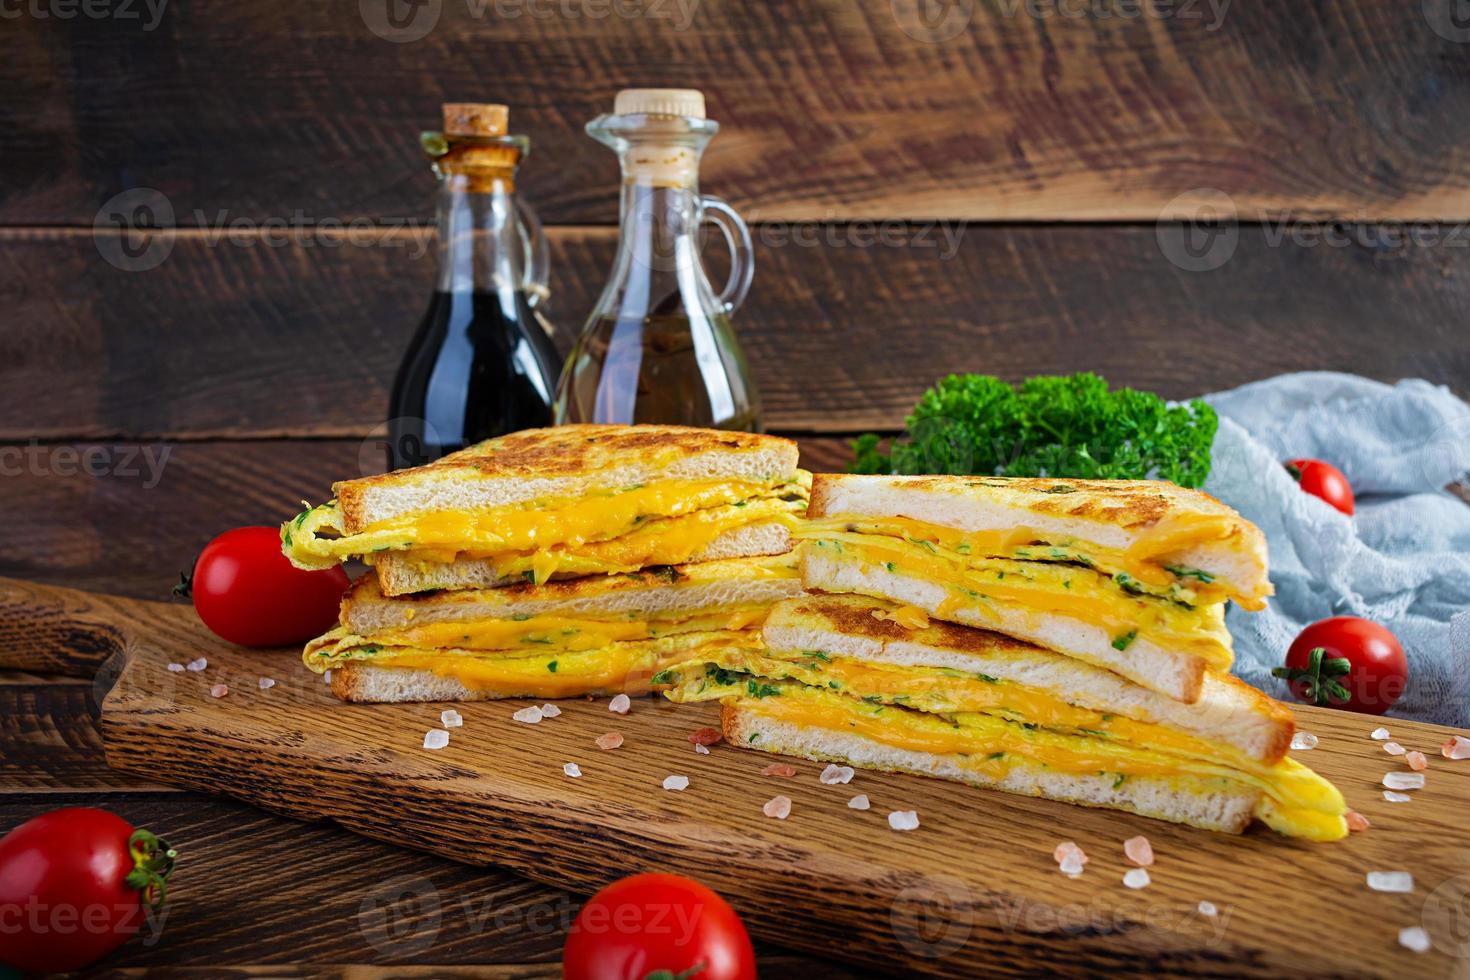 rabanada assada com presunto, ovo, ervas e queijo cheddar. delicioso sanduíche de café da manhã grelhado foto